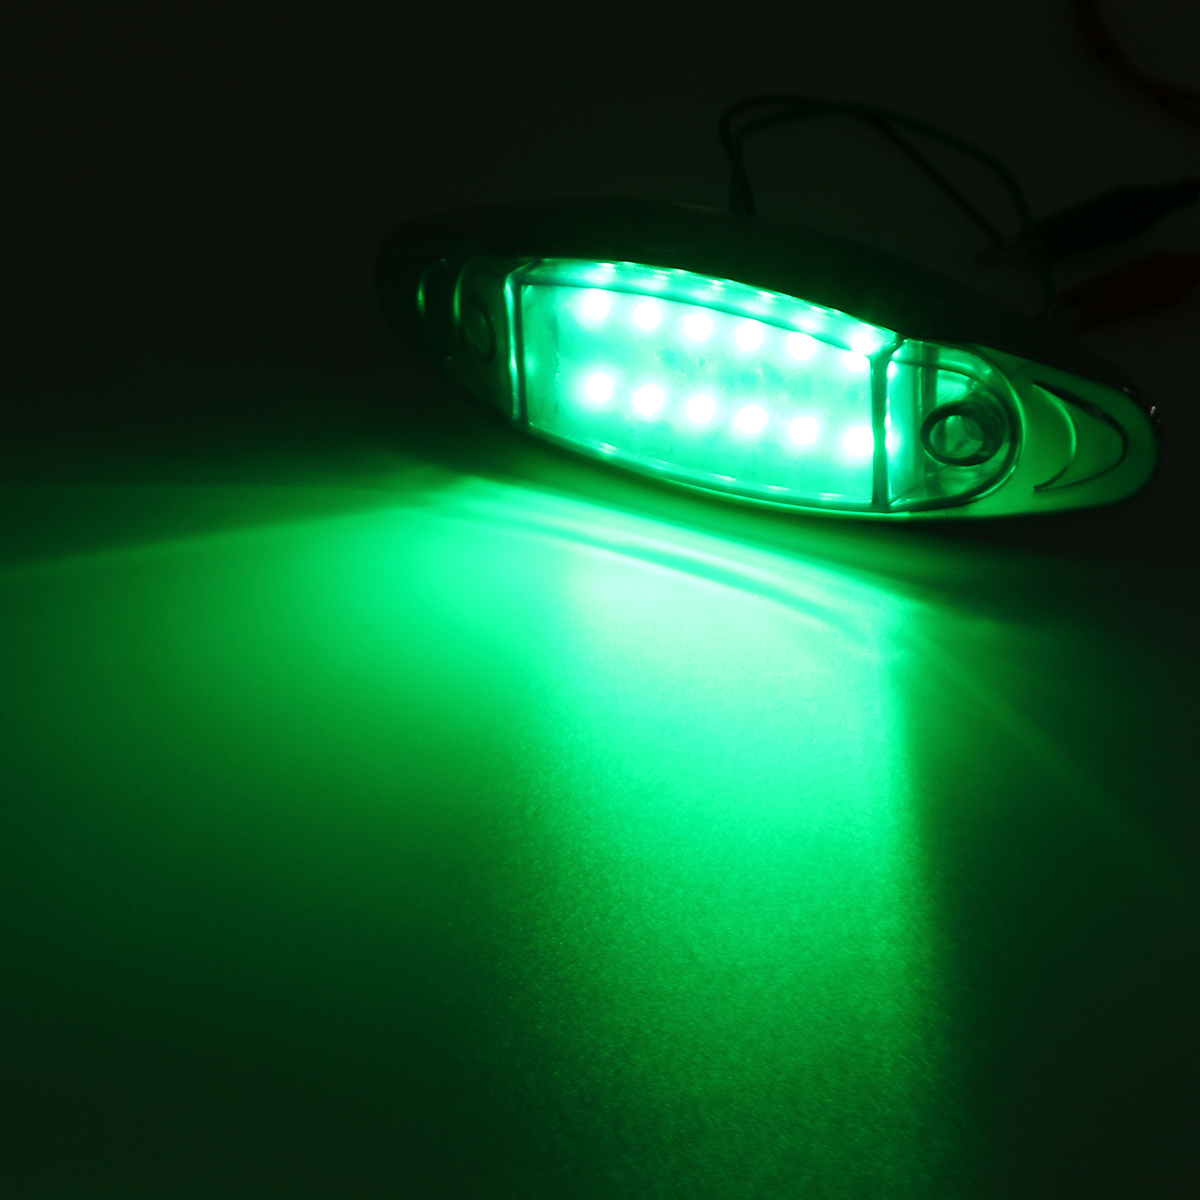 24V LED Side Marker Light Flash Strobe Emergency Warning Lamp for Boat Car Truck Trailer